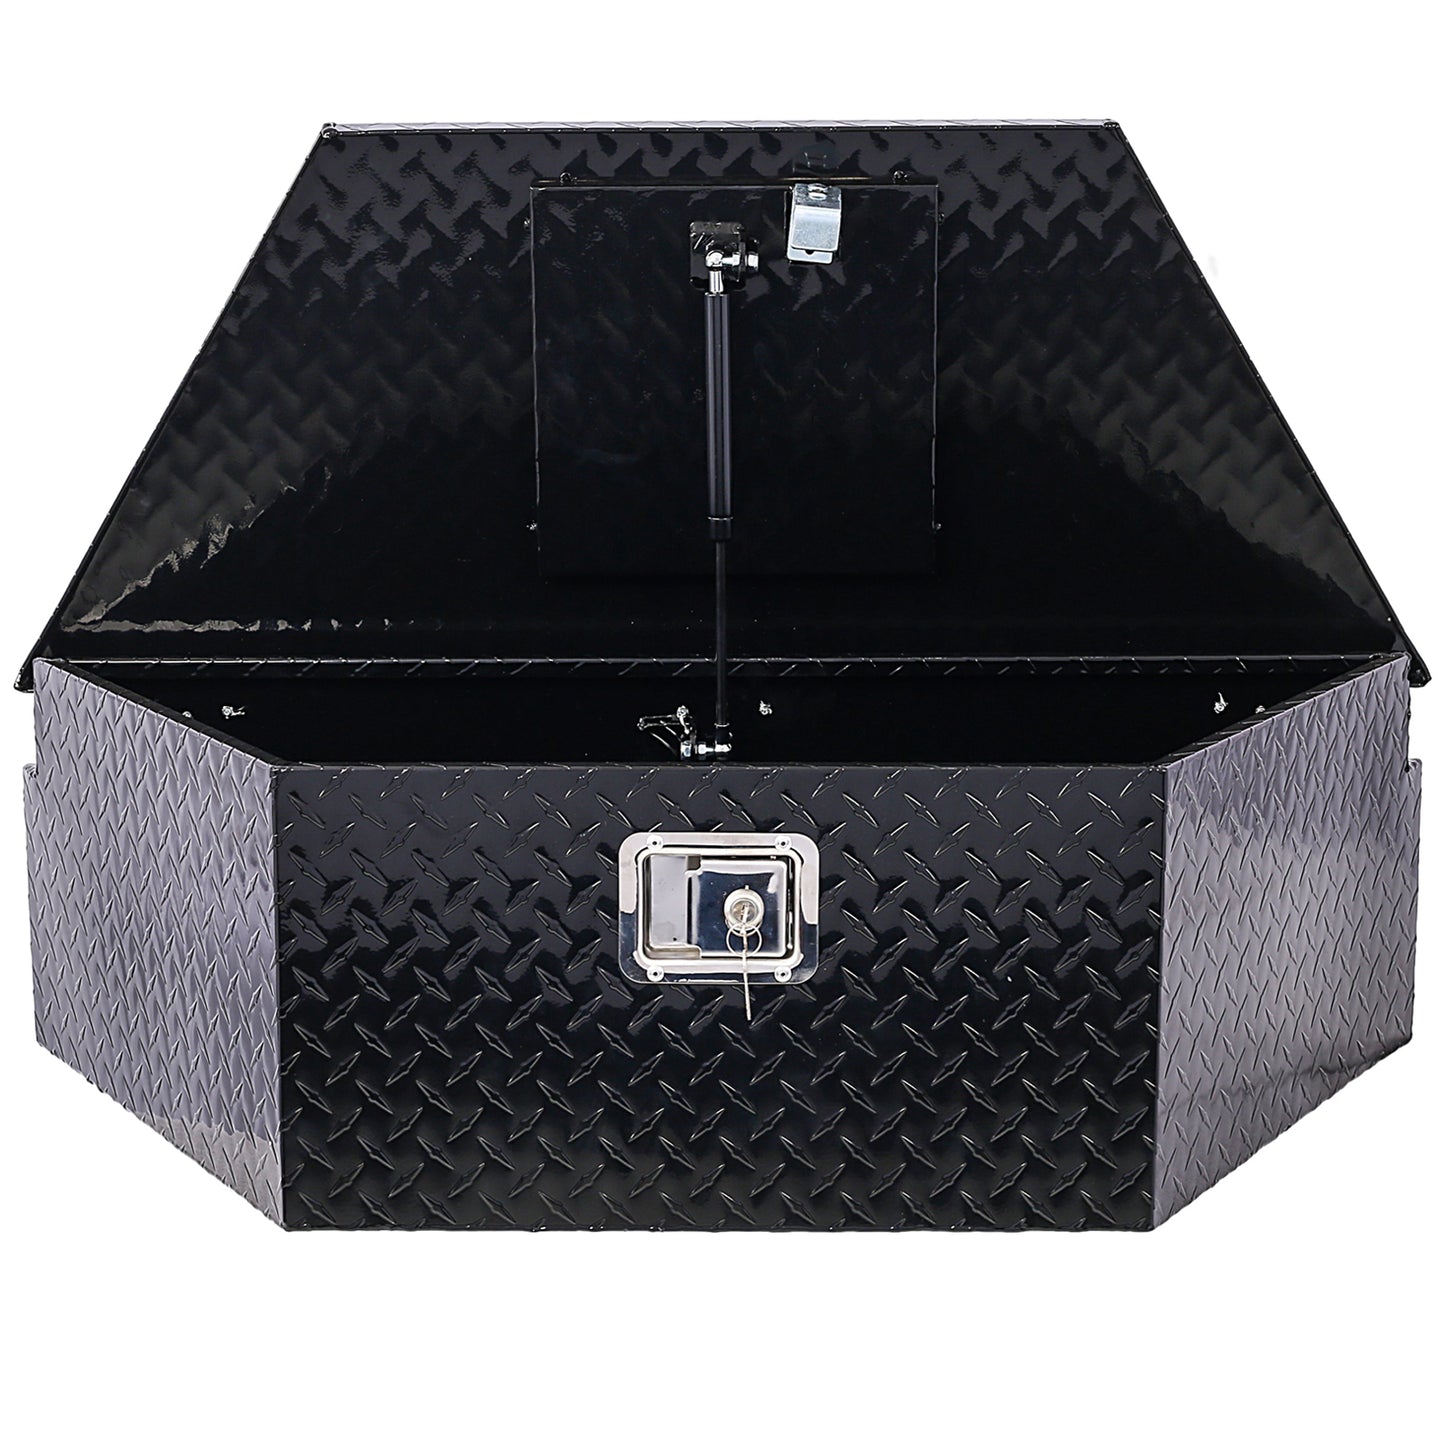 39inch Aluminum tool box,heavy duty truck bed tool box,outdoor trailer pickup storage tool box,RV storage organizer,underbody box w/lock keys,black 39x16.5x11.8inch